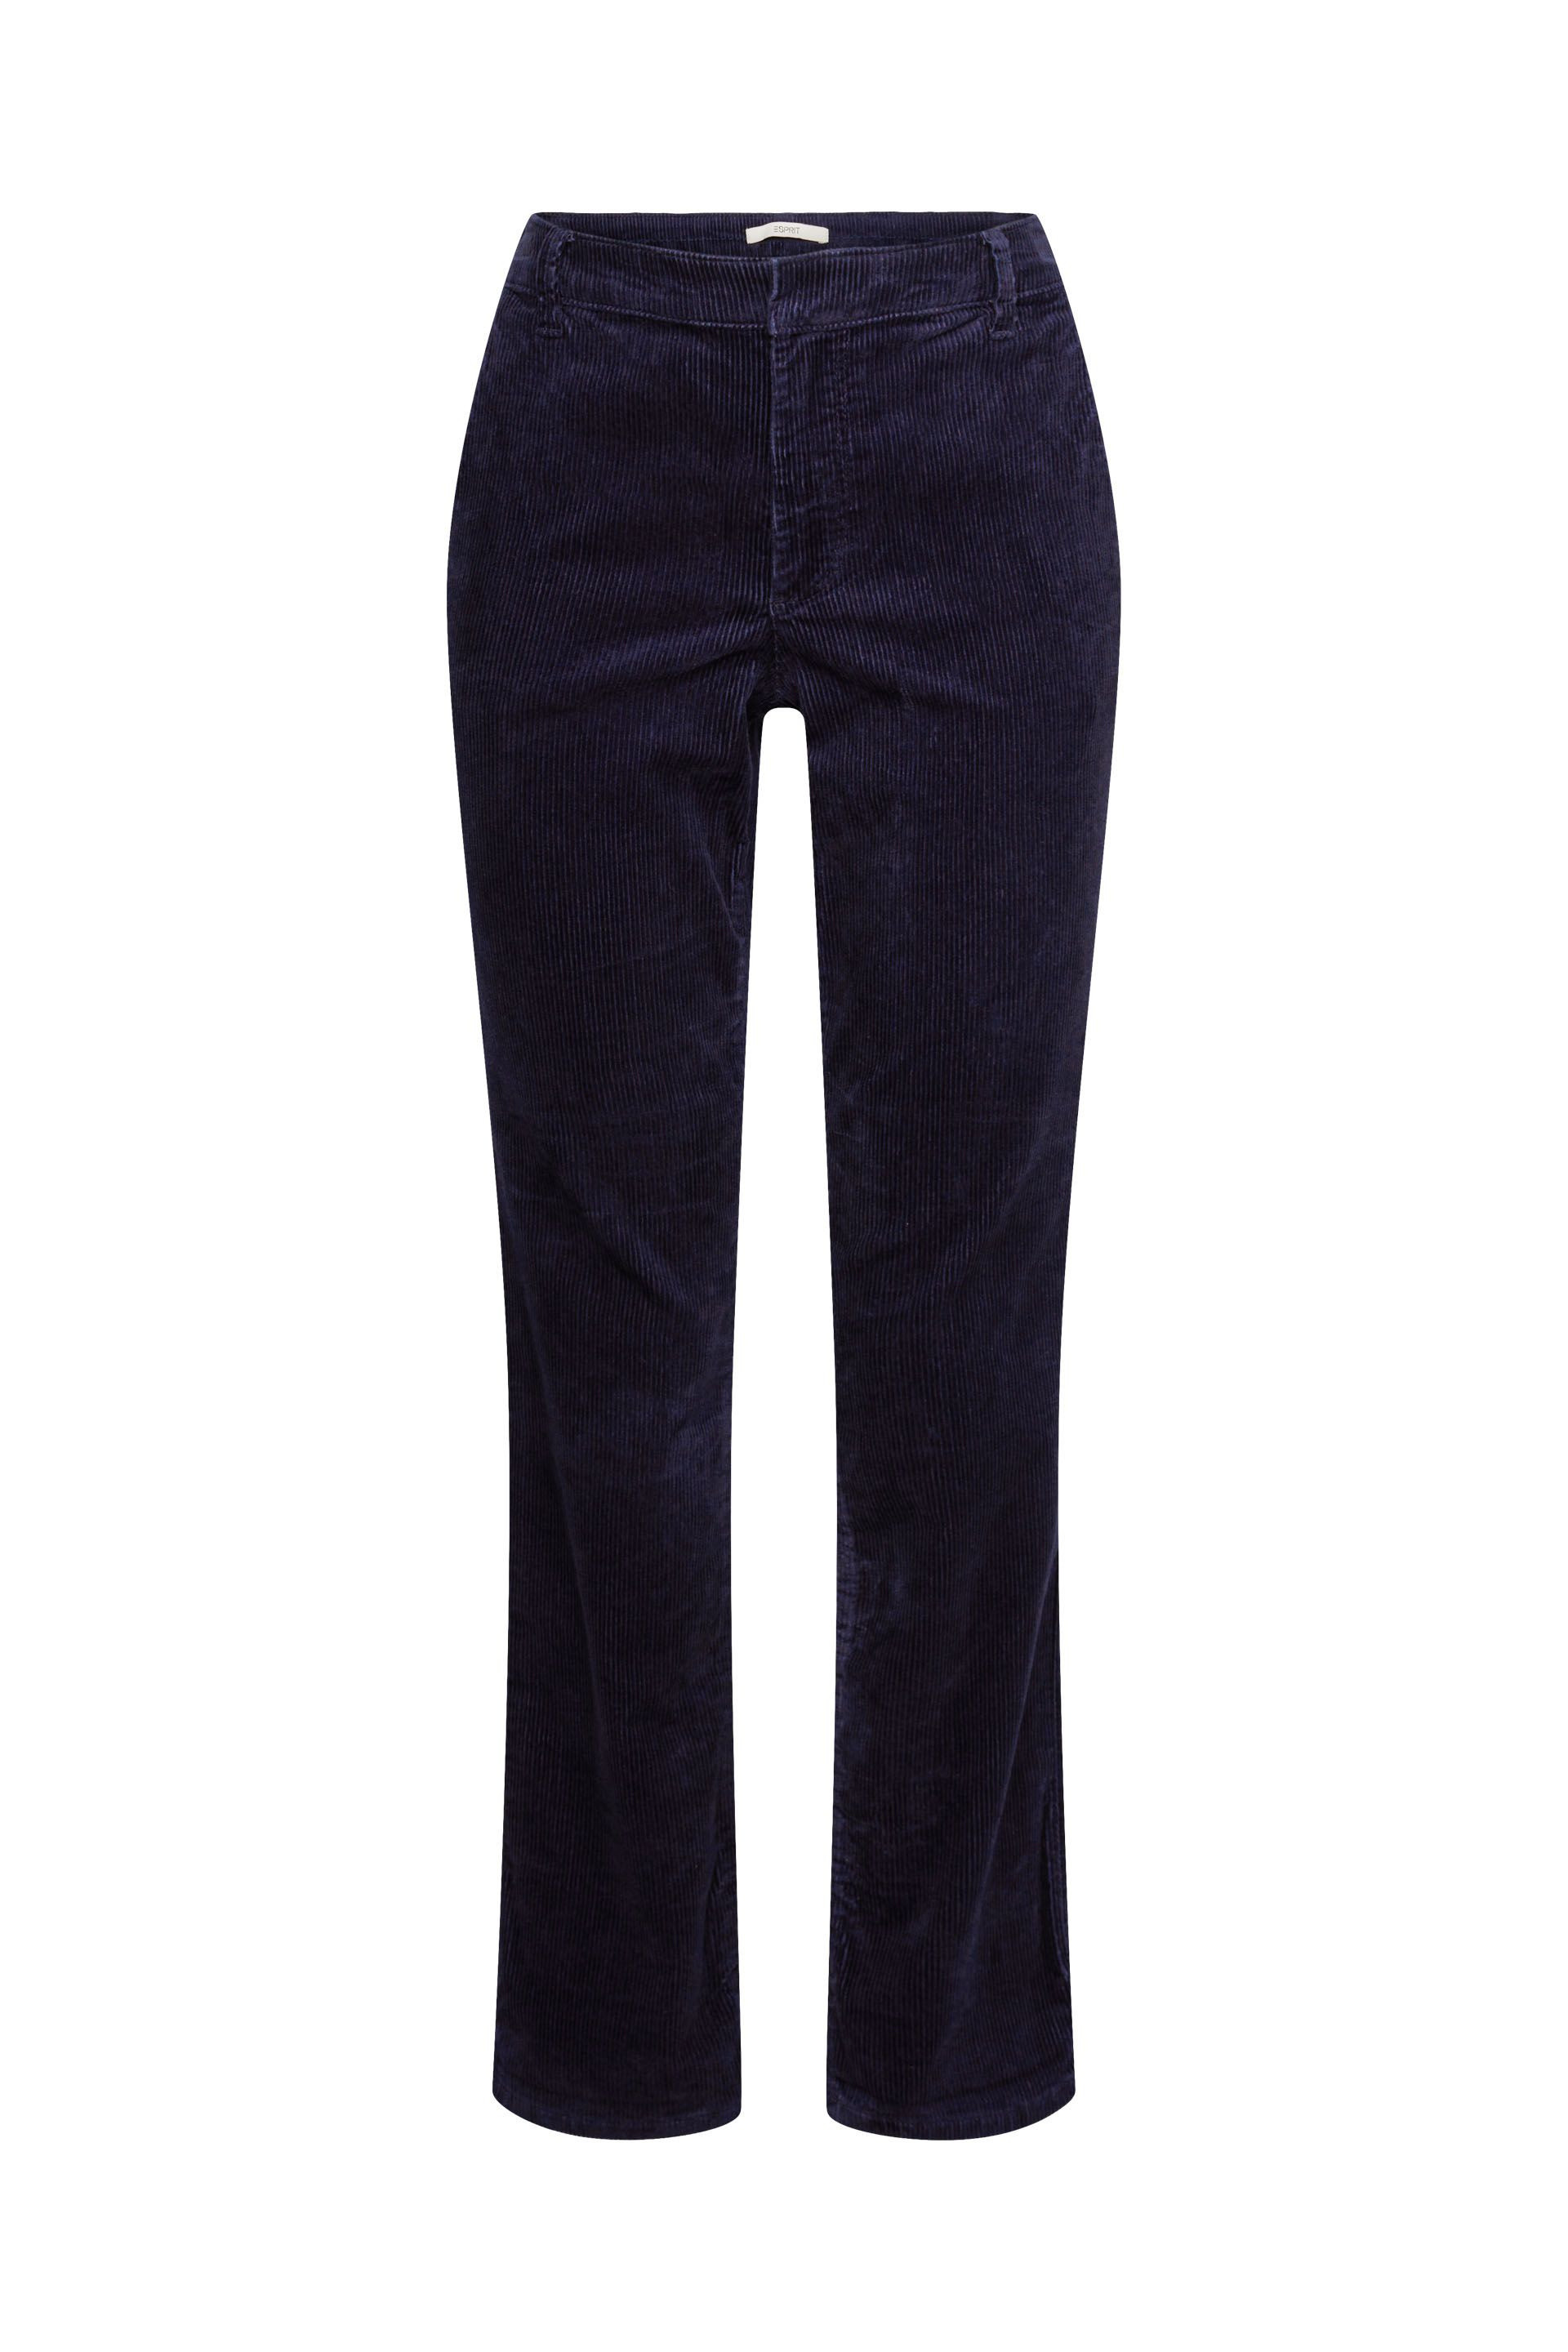 Pantalone in velluto di cotone, Blu, large image number 0